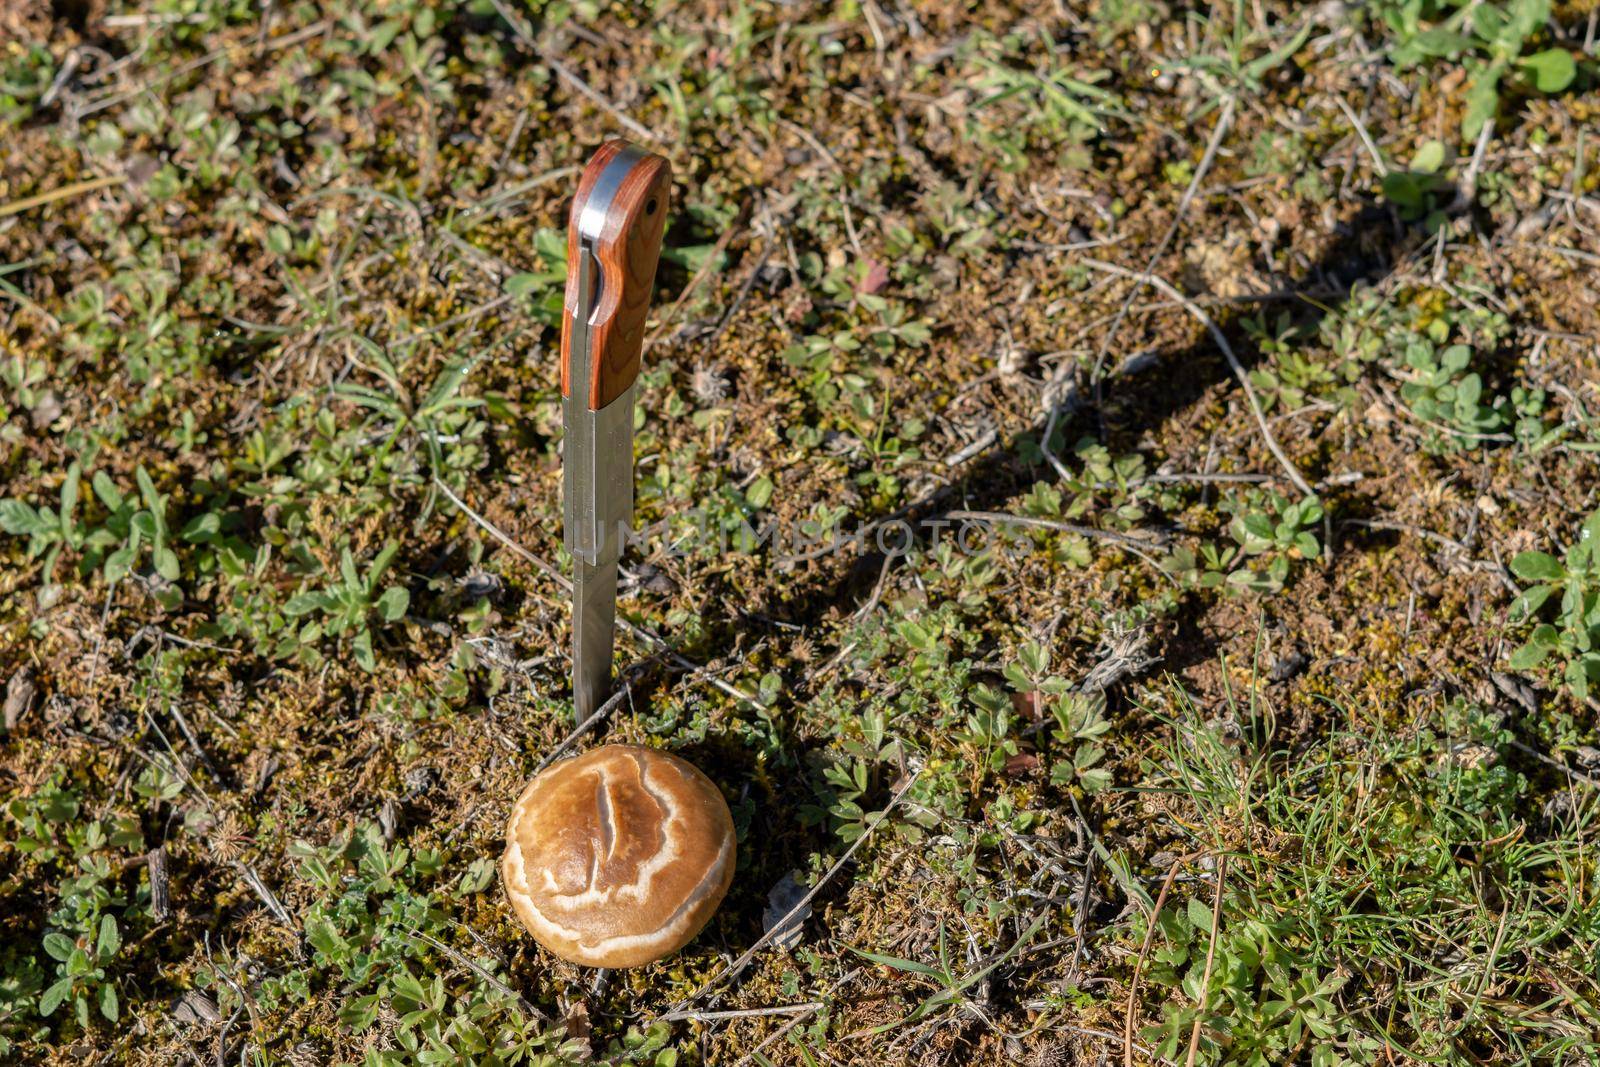 thistle mushroom pleurotus ostreatus in the field cut with a razor blade